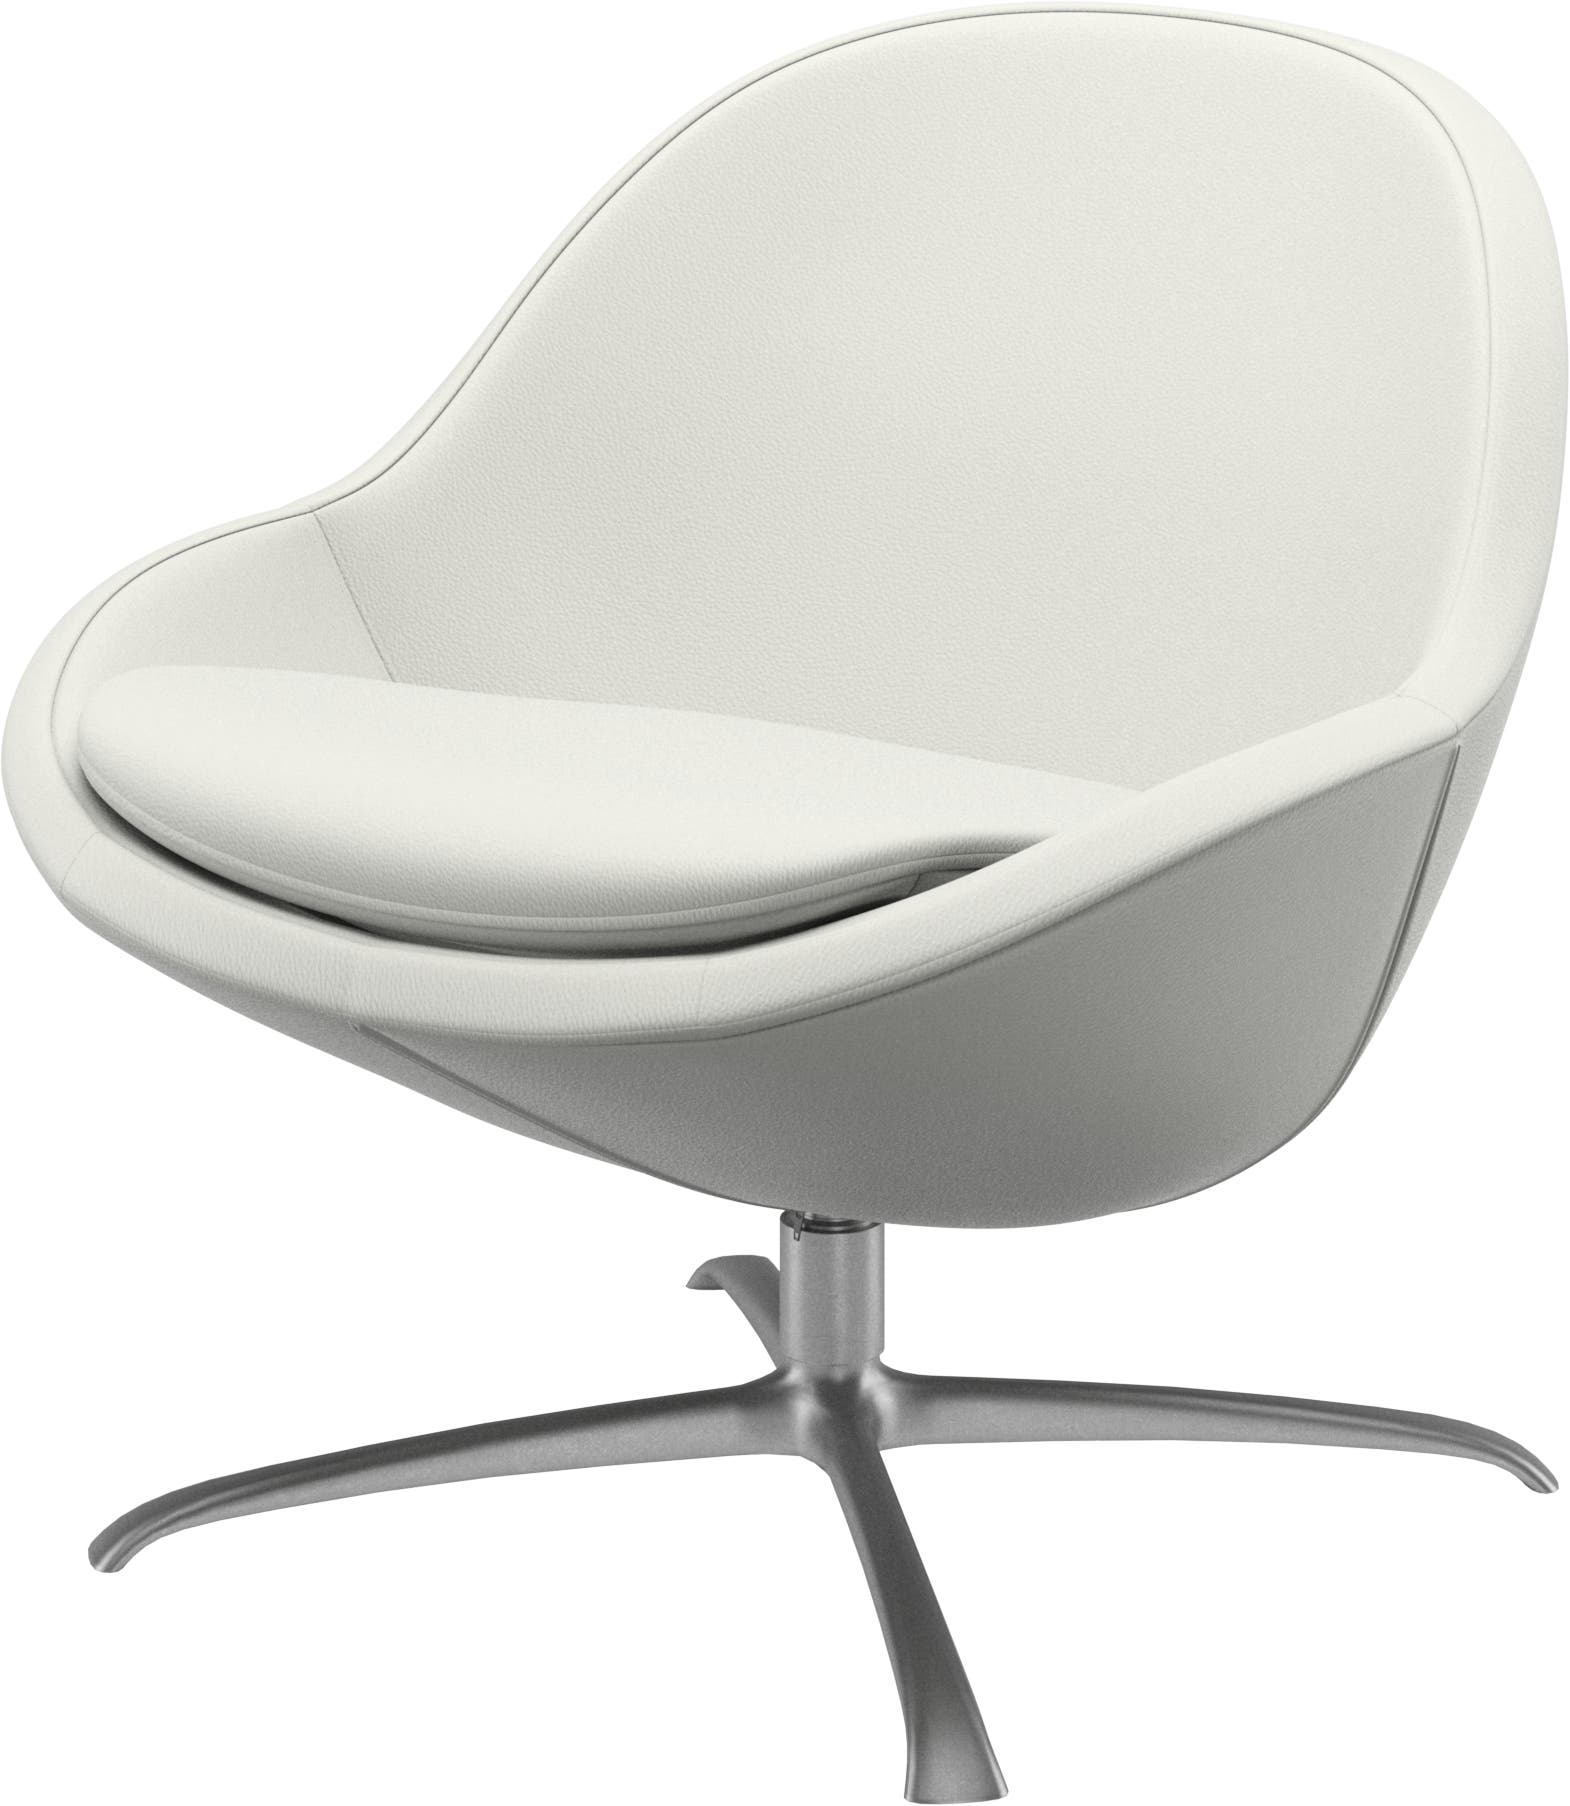 Veneto chair with swivel function